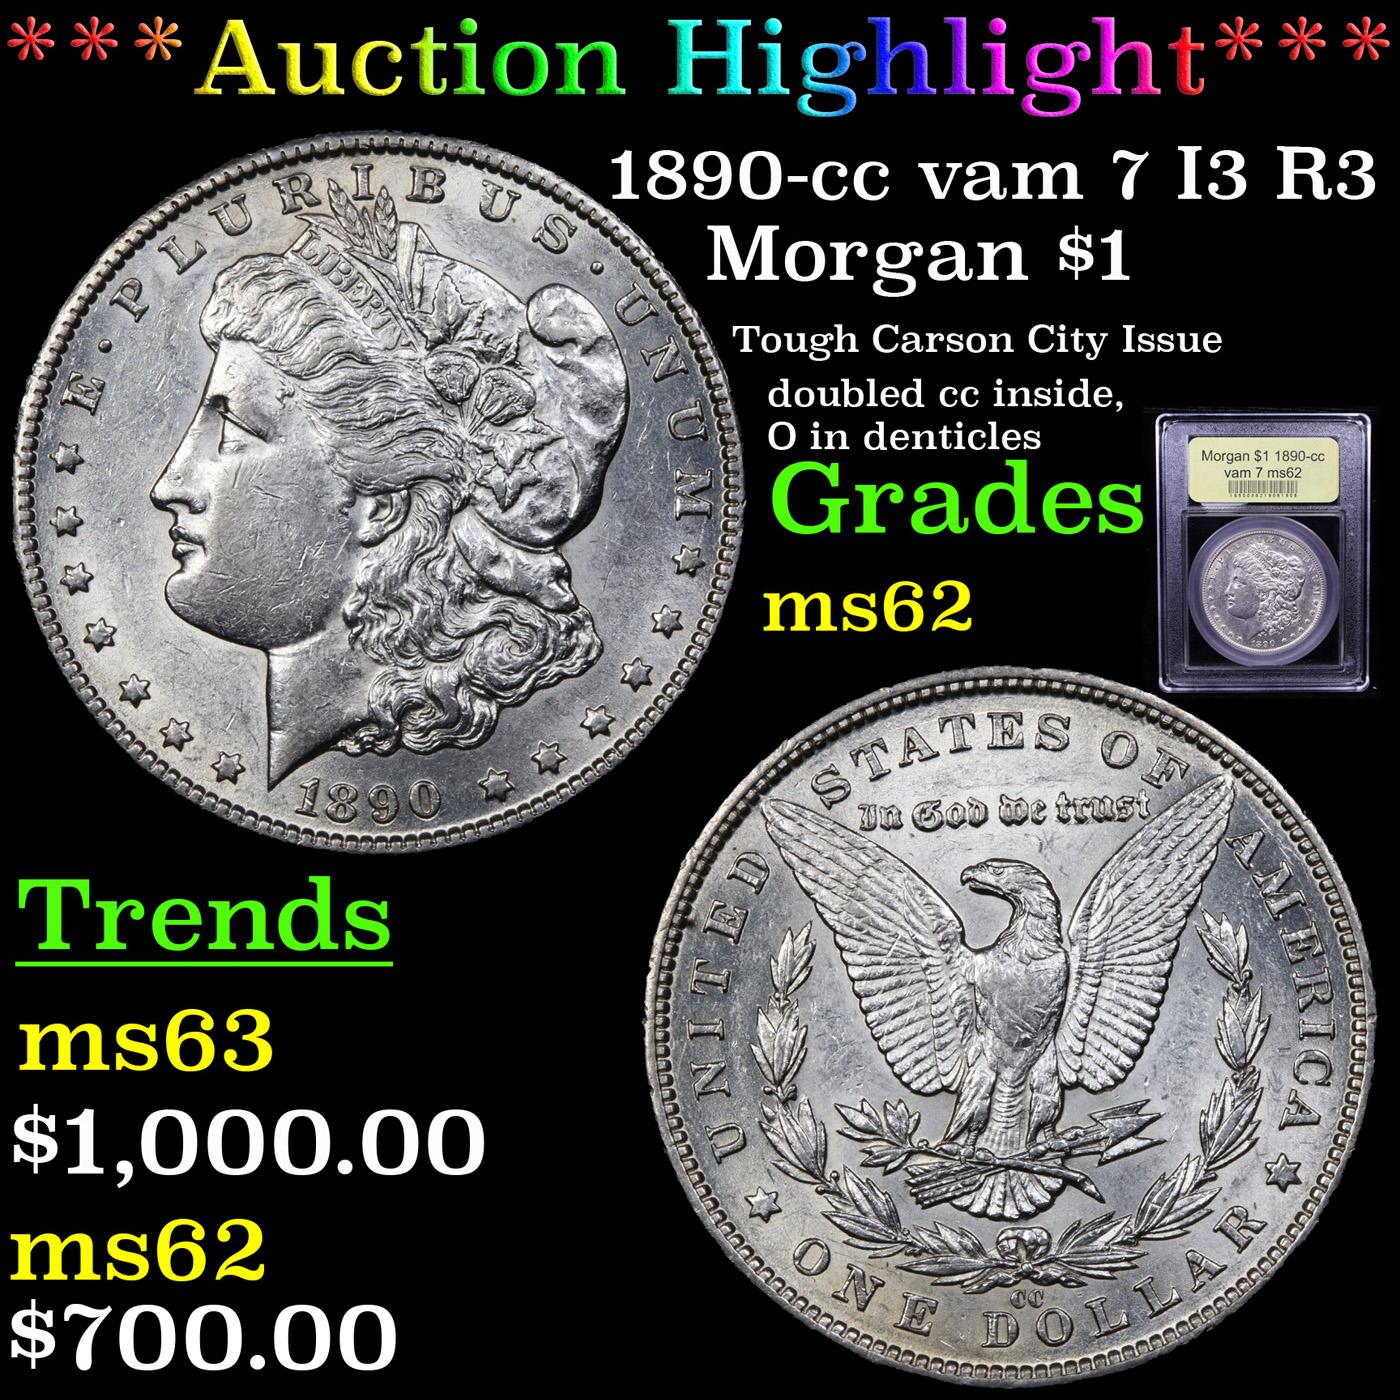 ***Auction Highlight*** 1890-cc vam 7 I3 R3 Morgan Dollar $1 Graded Select Unc By USCG (fc)